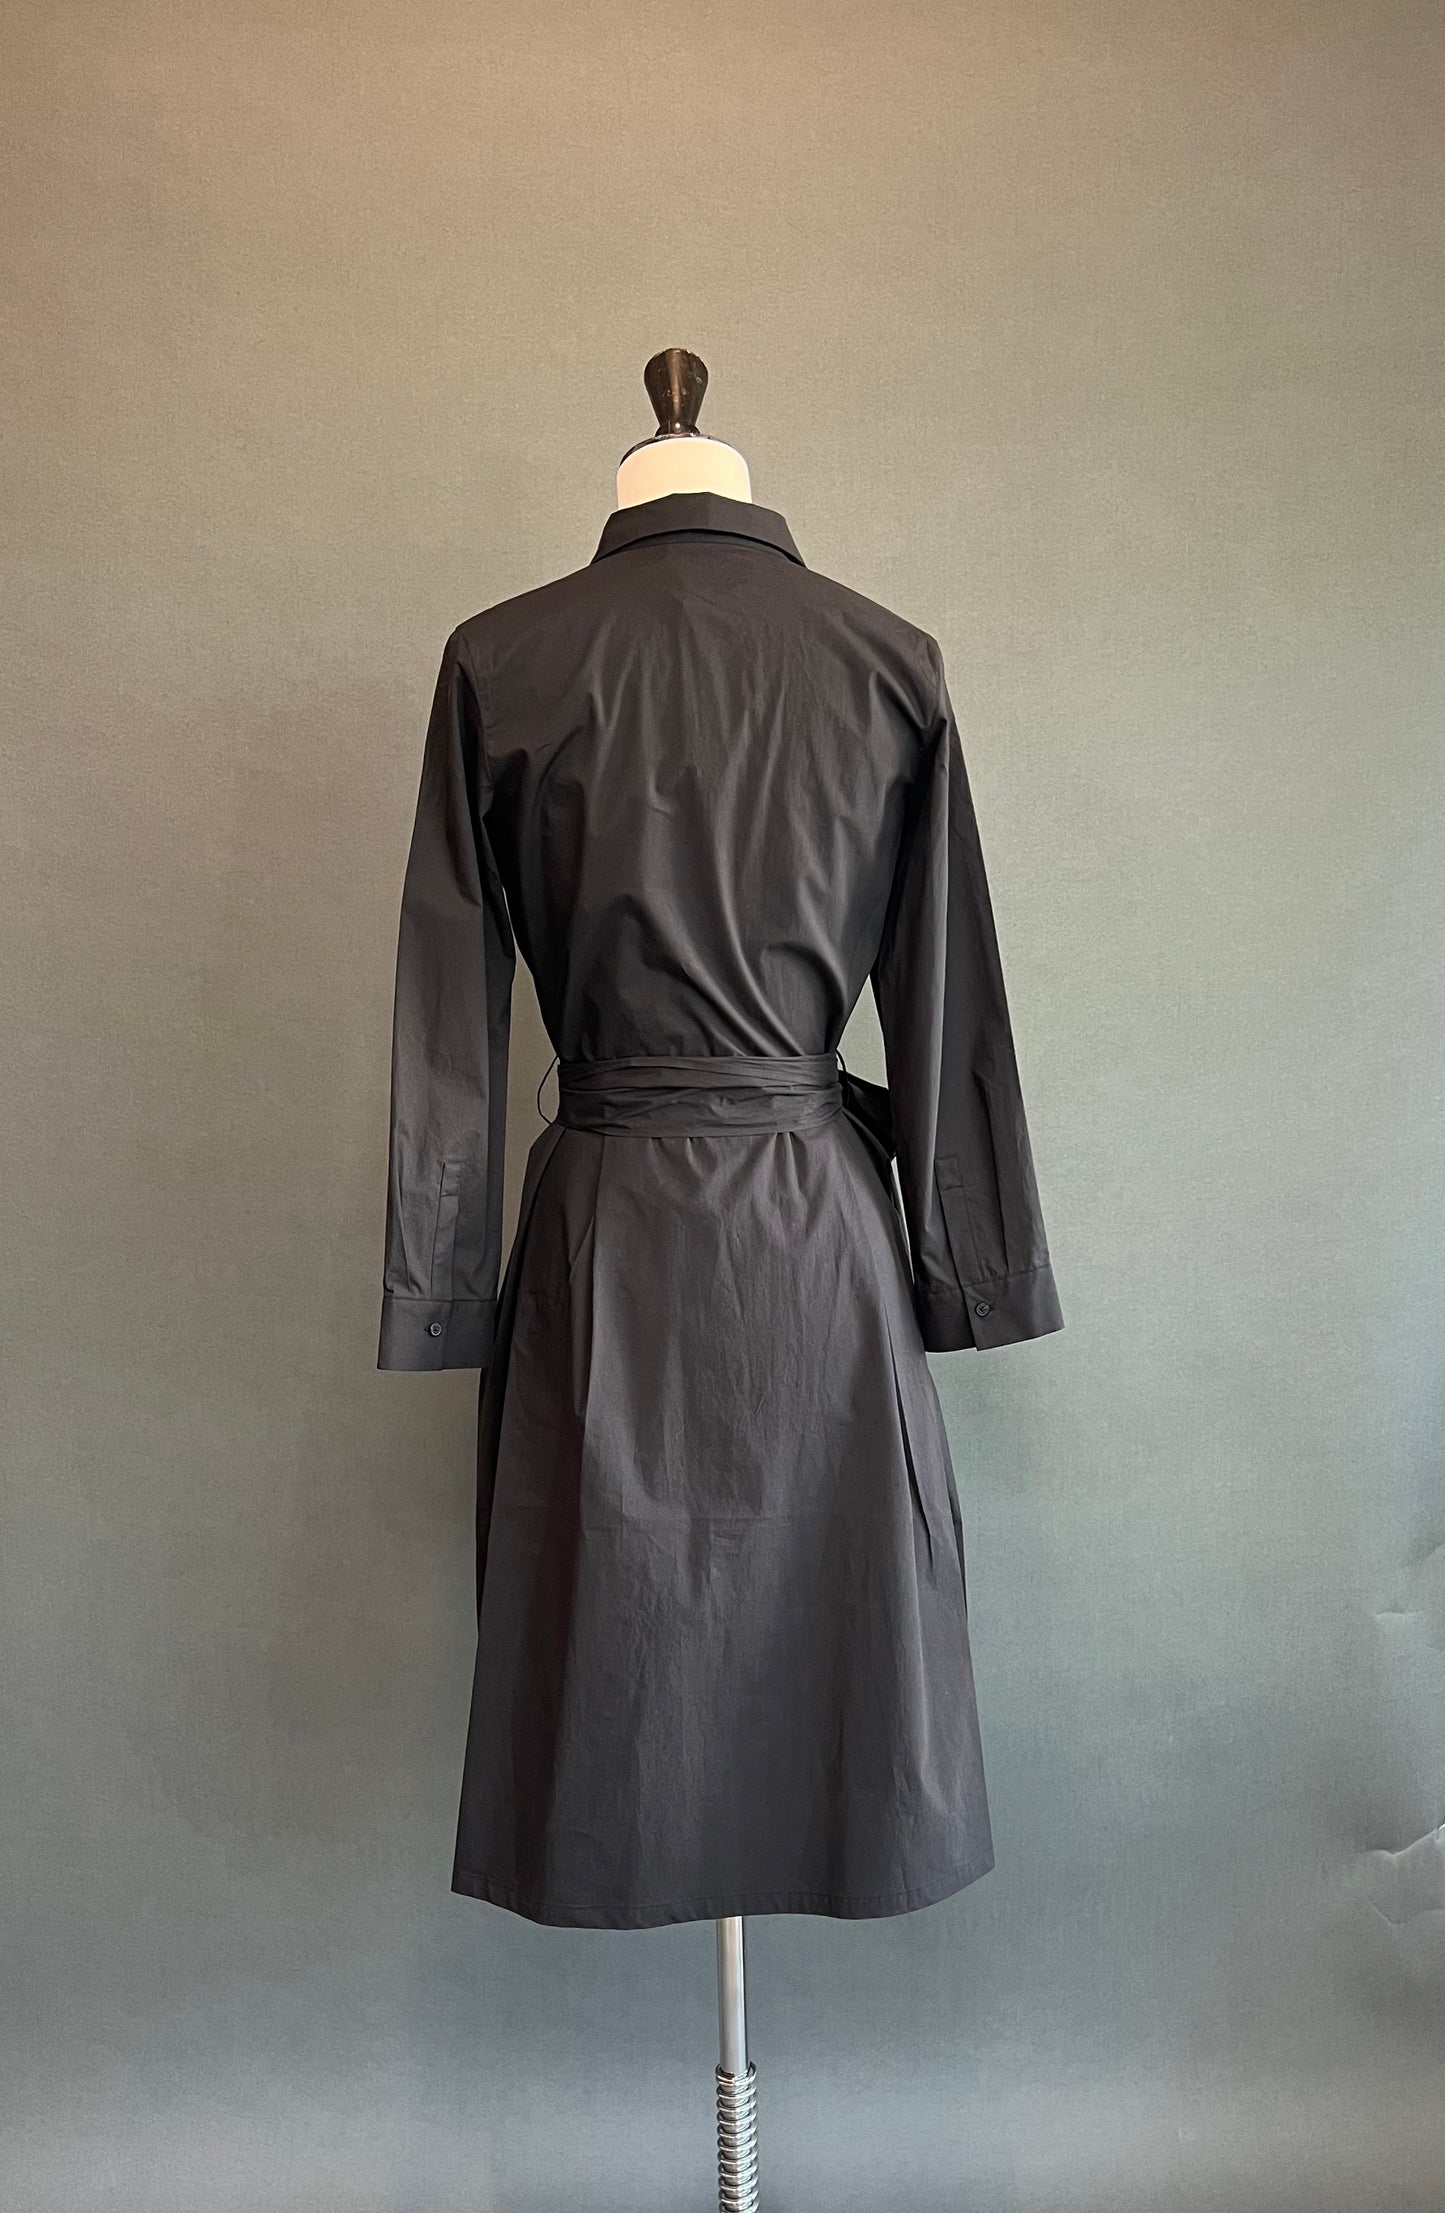 Lis Lareida - Yelena Dress in Black Cotton